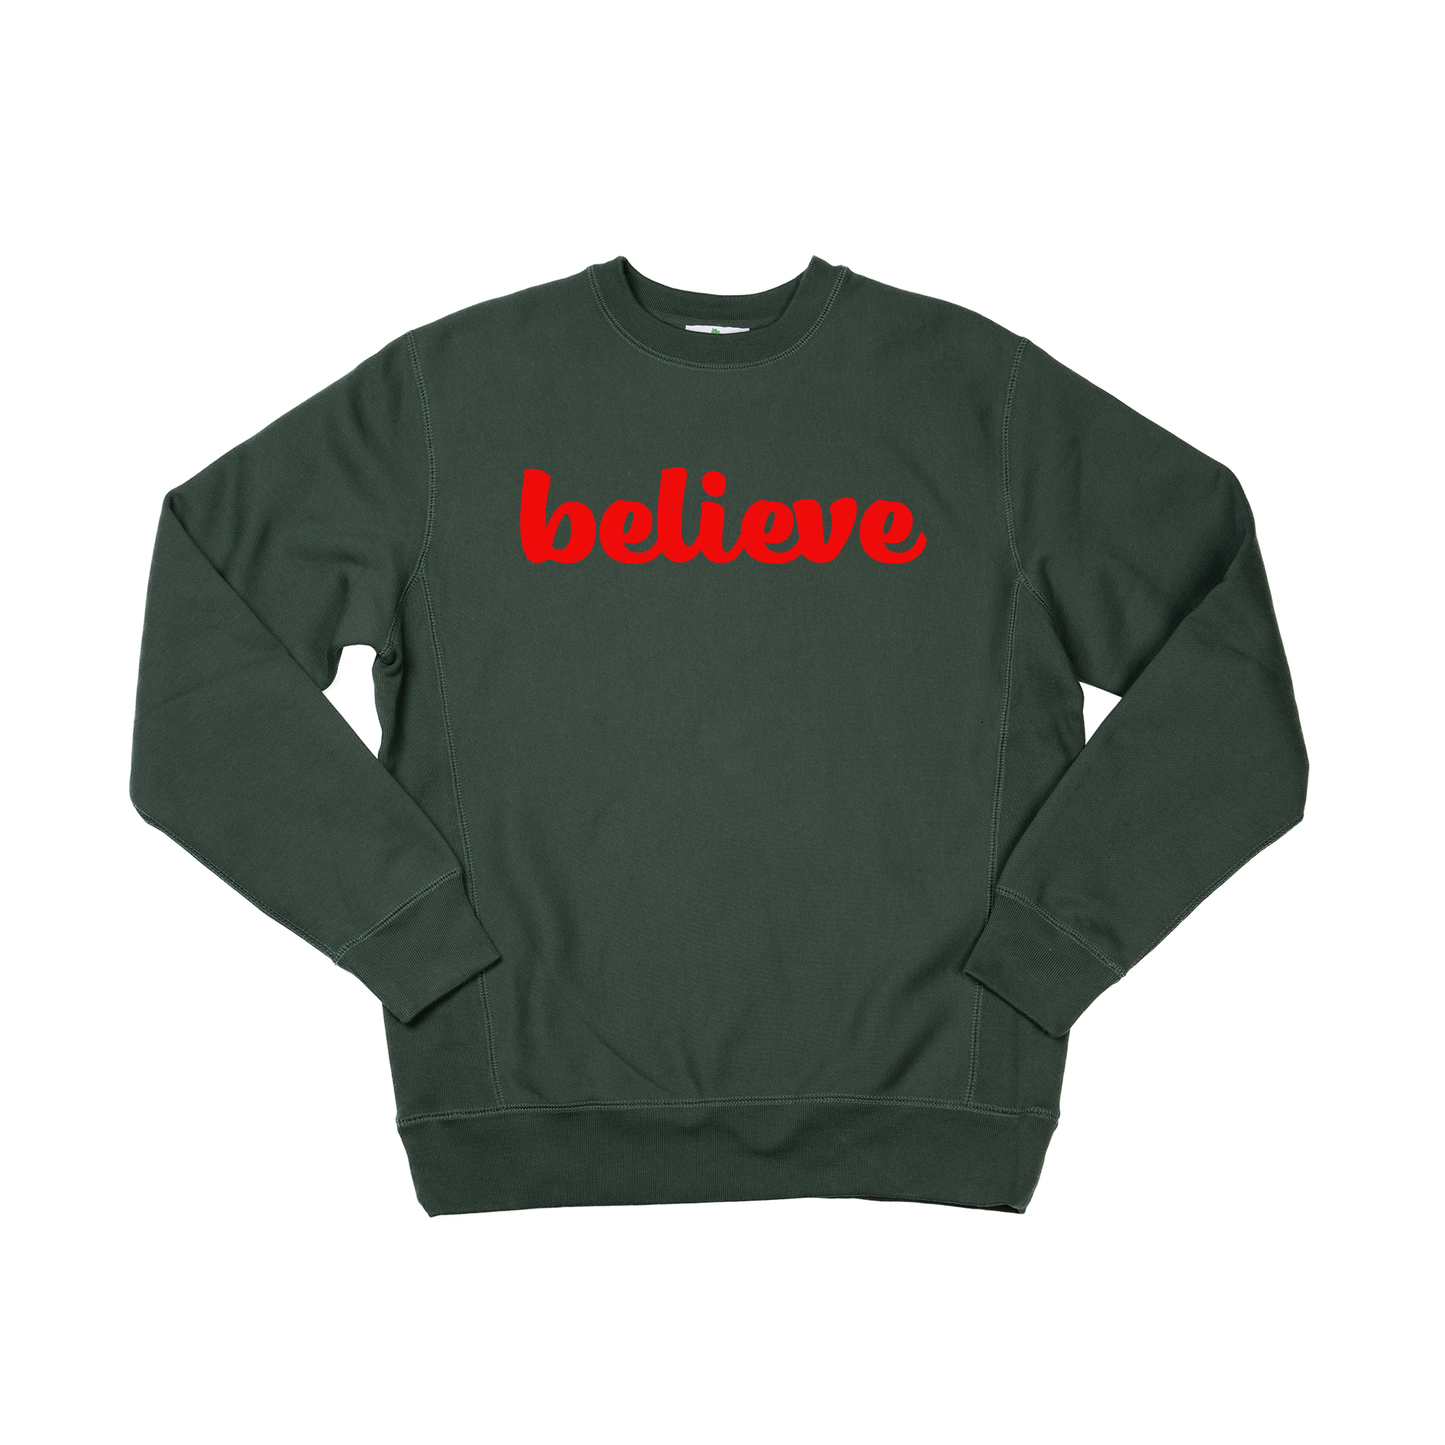 Believe (Thick Cursive, Red) - Heavyweight Sweatshirt (Pine)